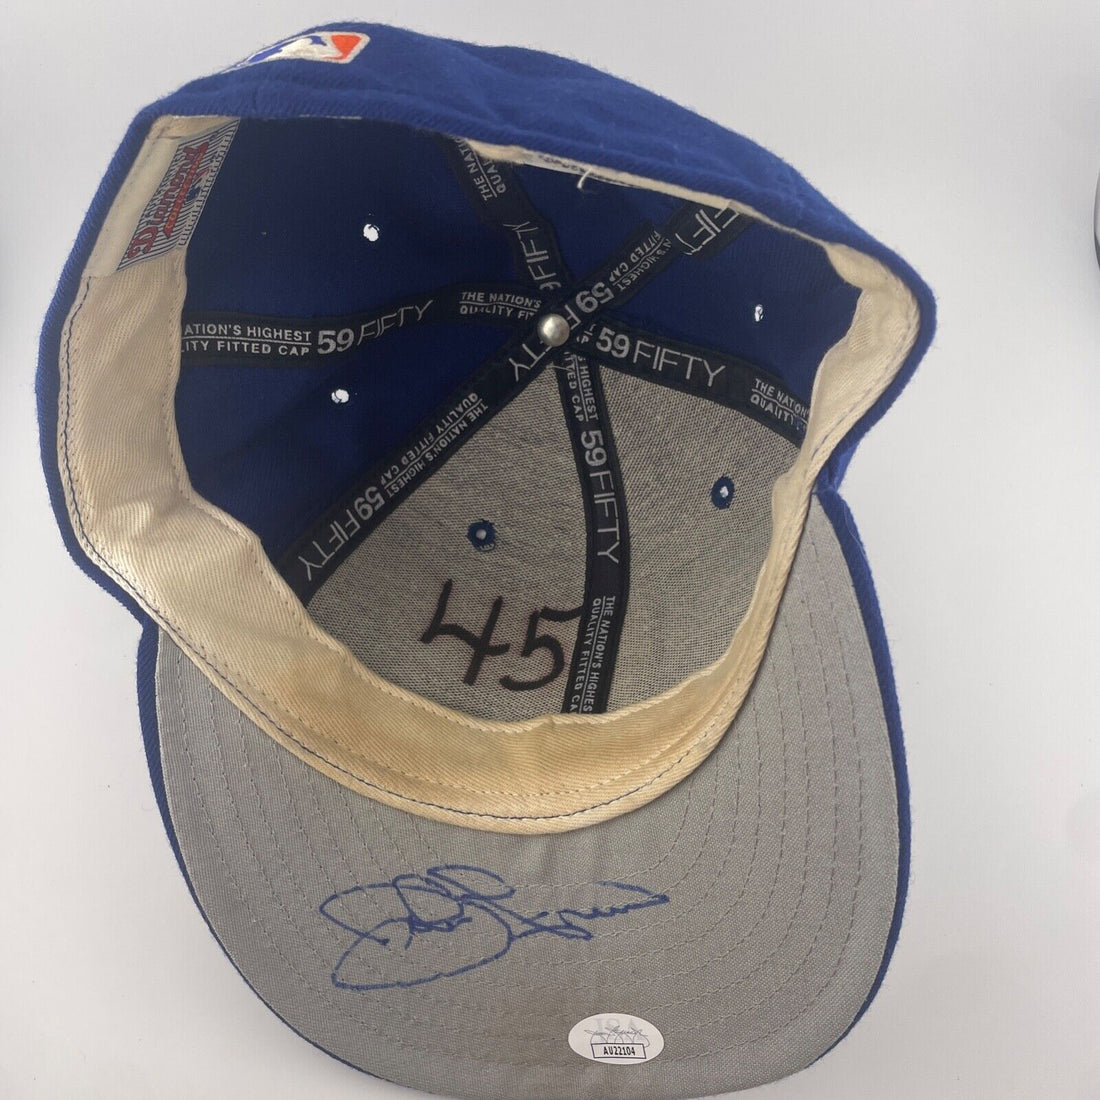 John Franco Signed Game Used Hat. New York Mets. JSA